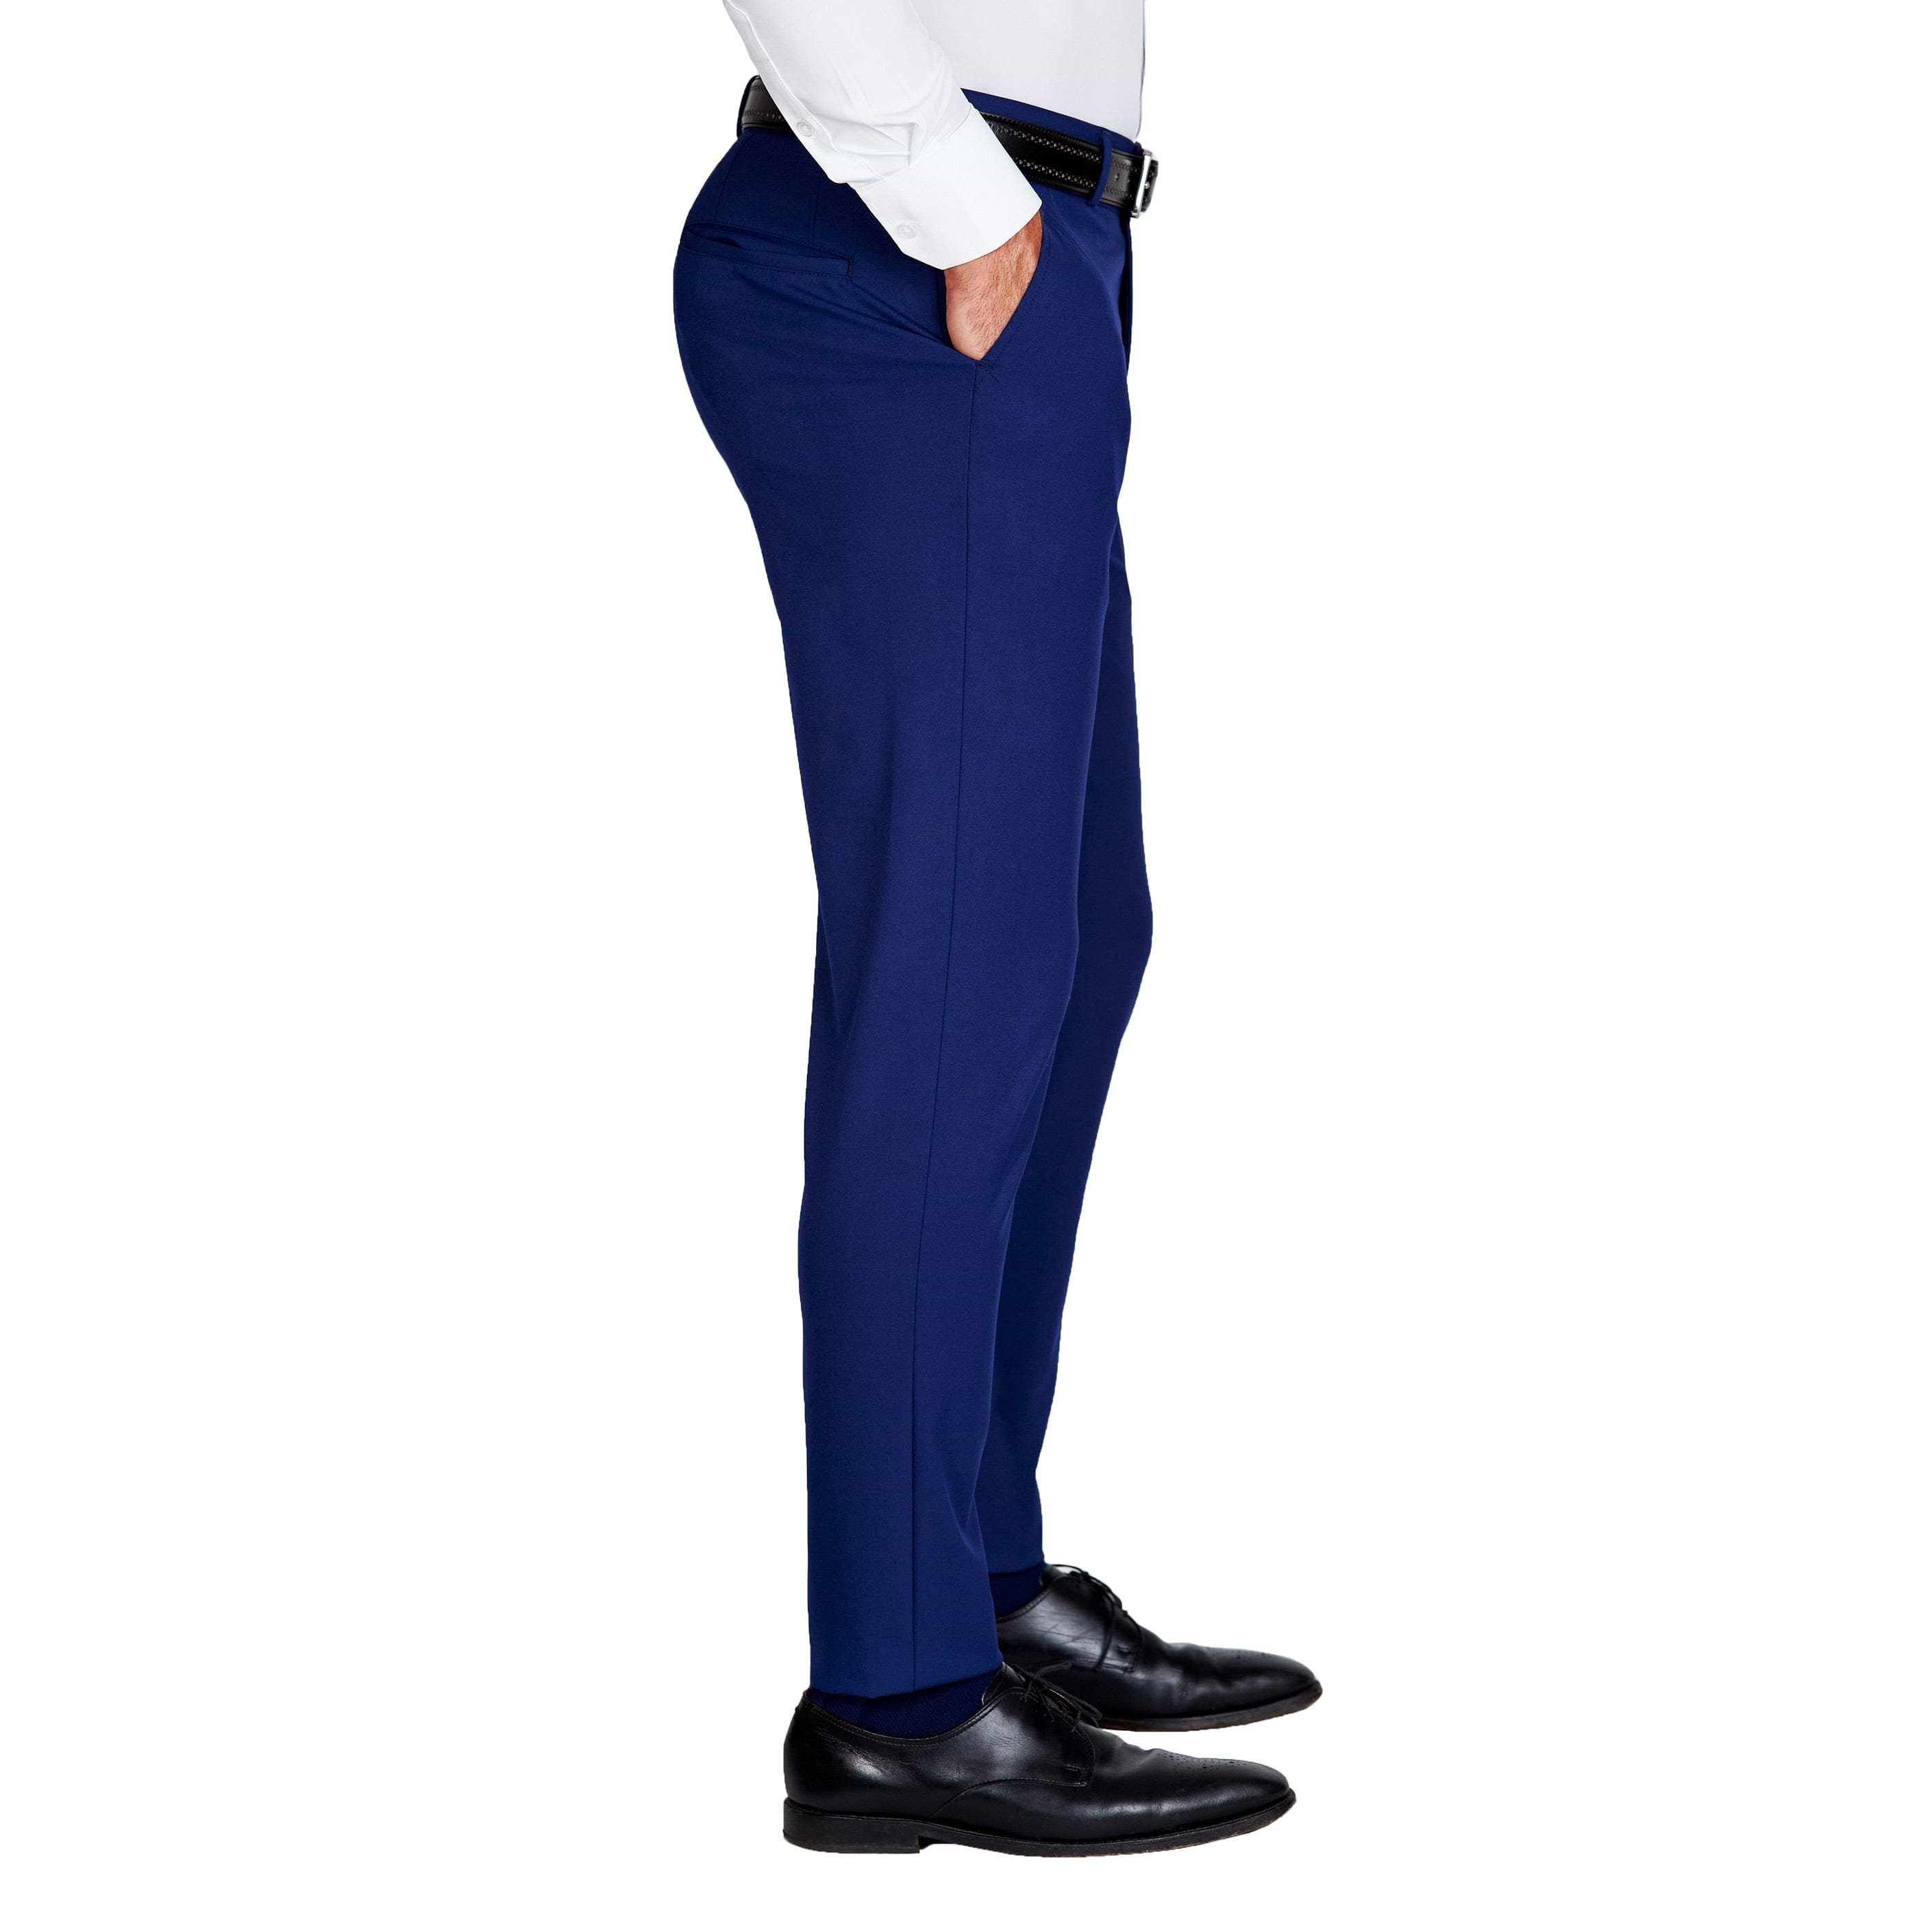 Athletic Fit Stretch Suit Pants - Solid Royal Blue